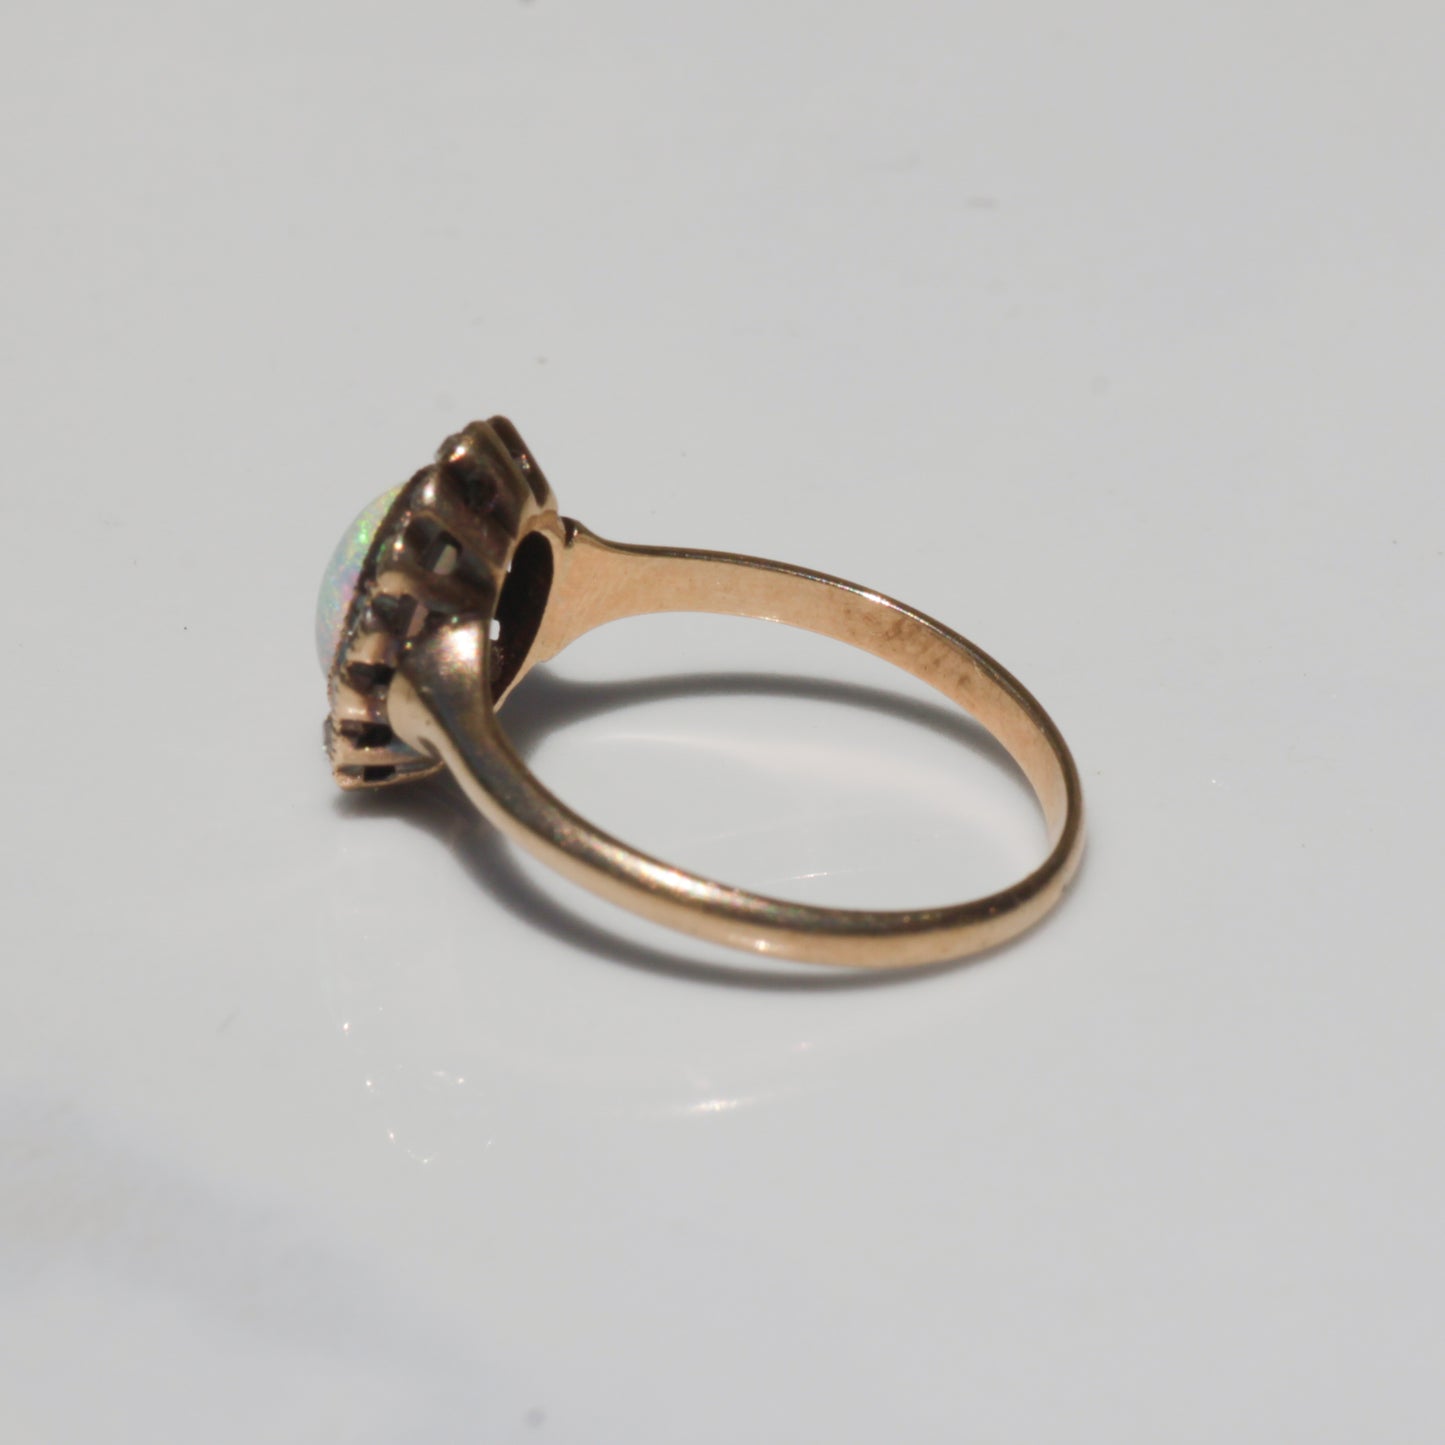 Antique Opal + Rosecut Diamond Halo Ring 14k Gold Sz 6 1/2